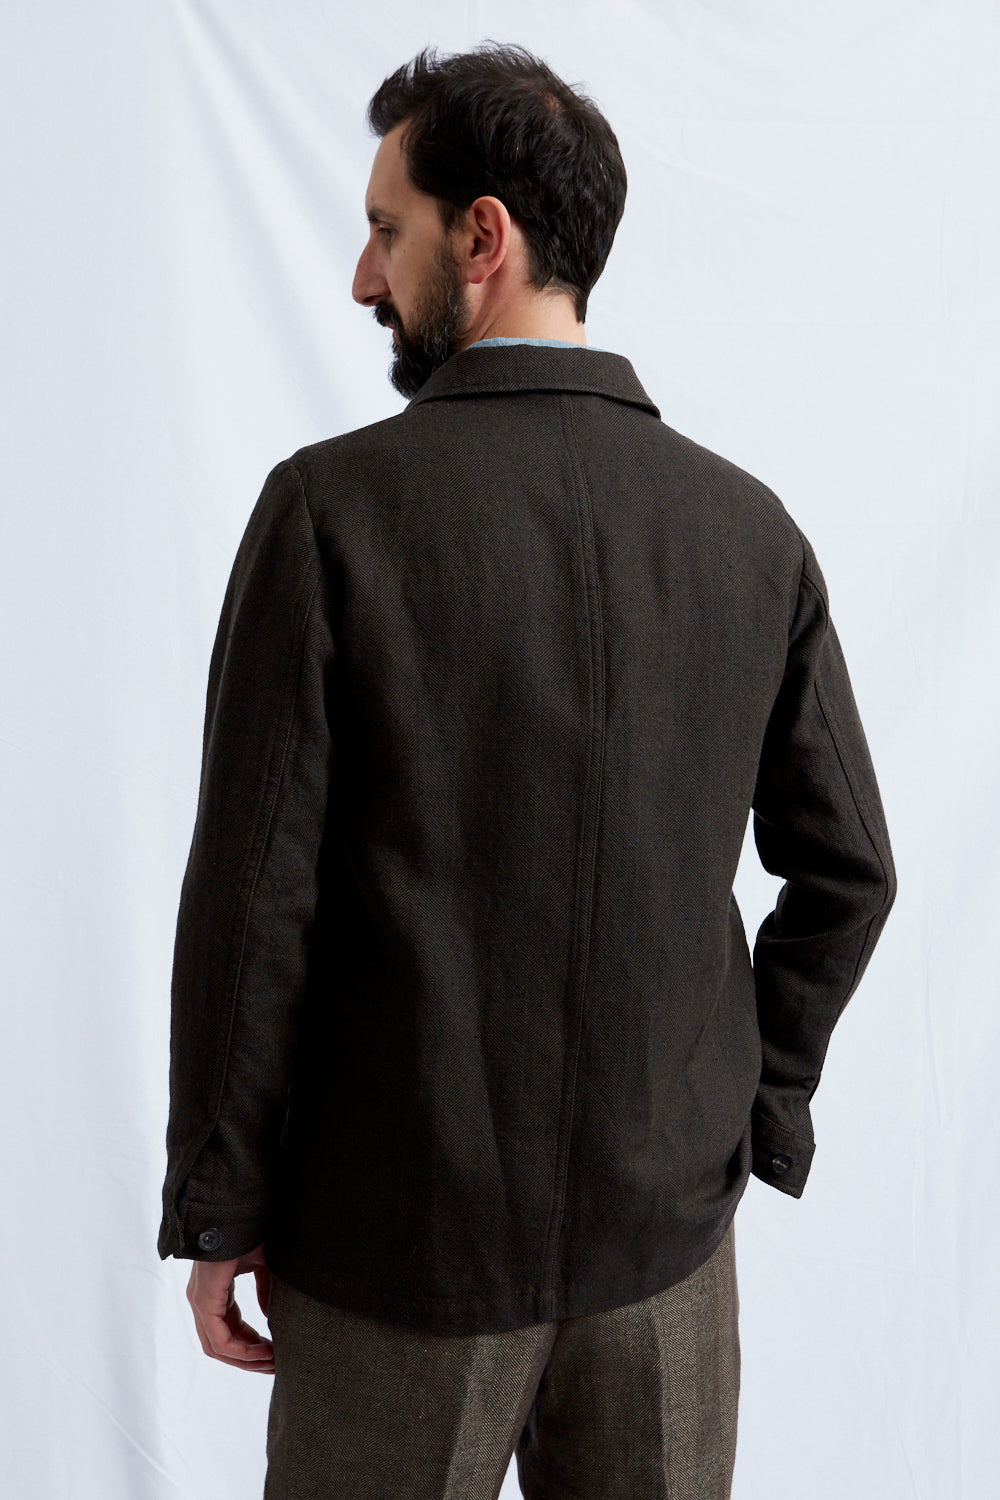 MASAI jacket HEMP WOOL cotton brown 2226